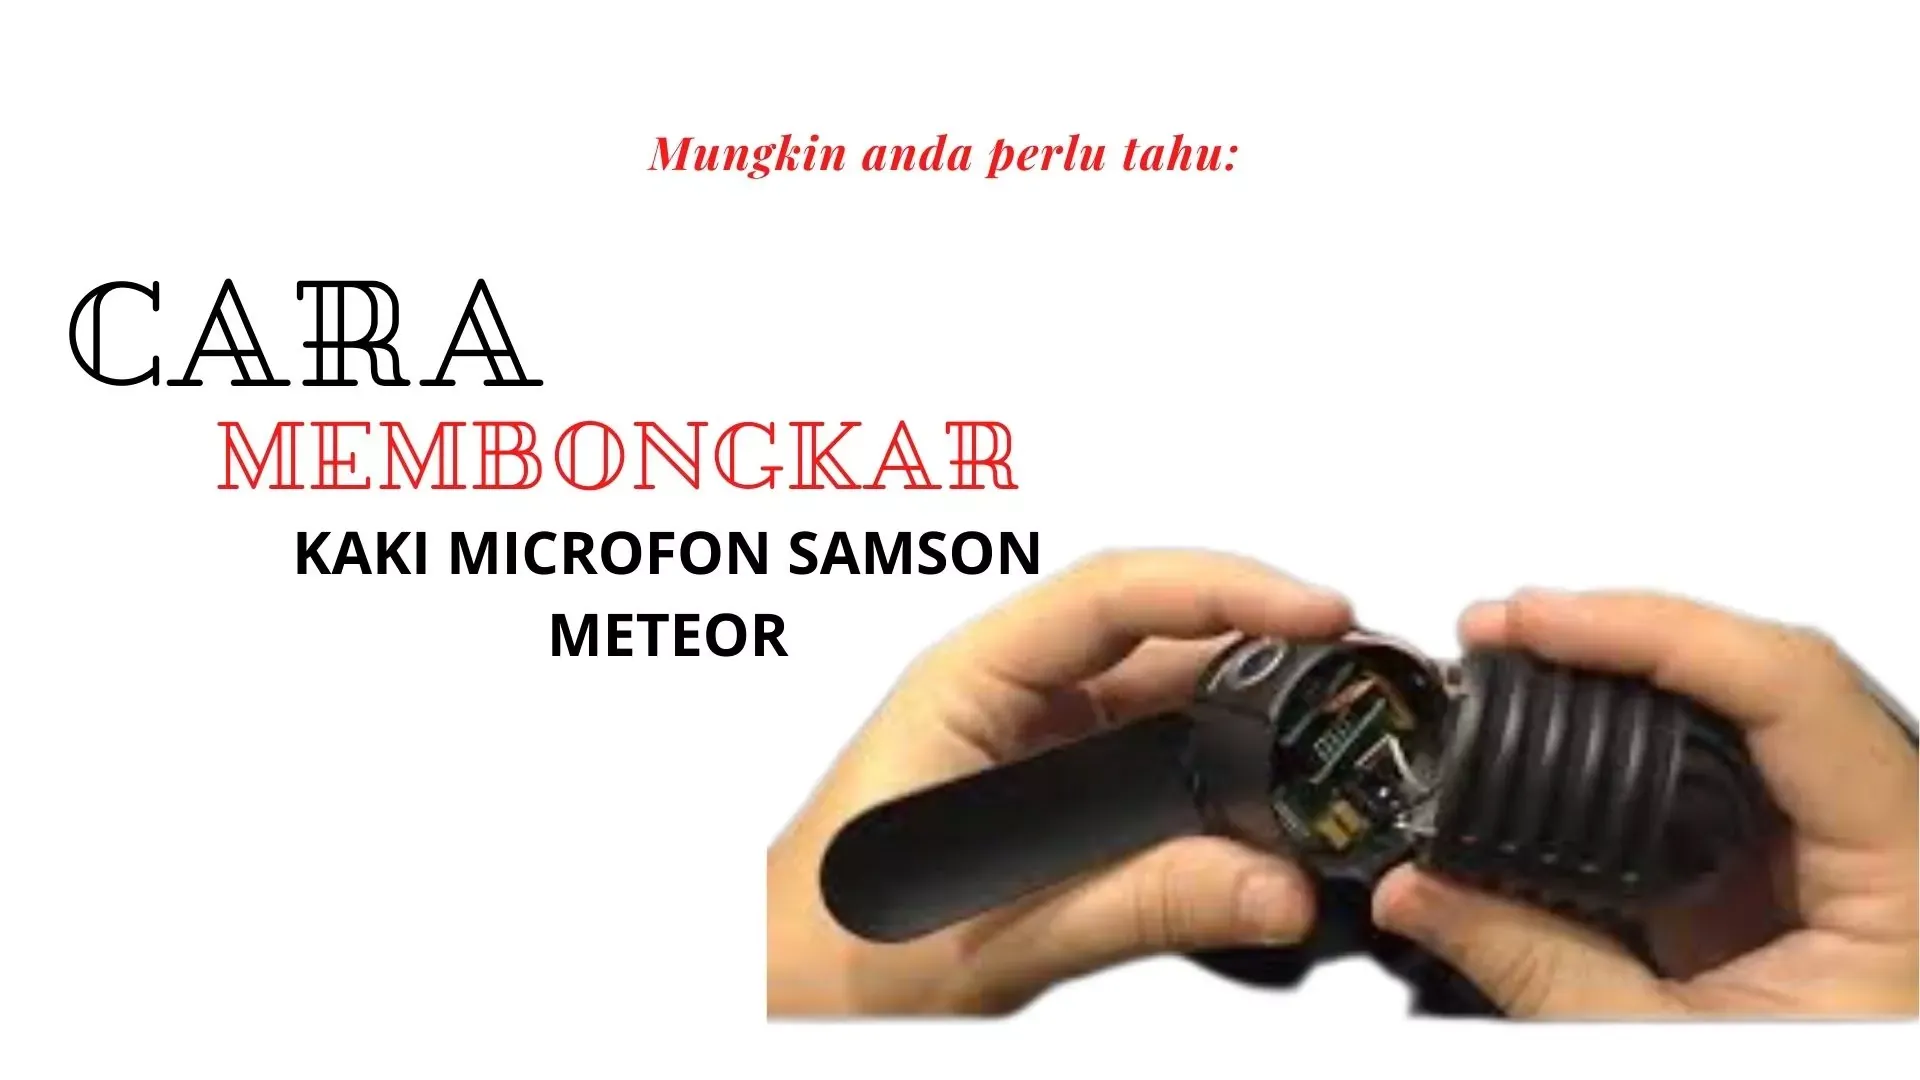 Cara membongkar kaki microfon samson meteor